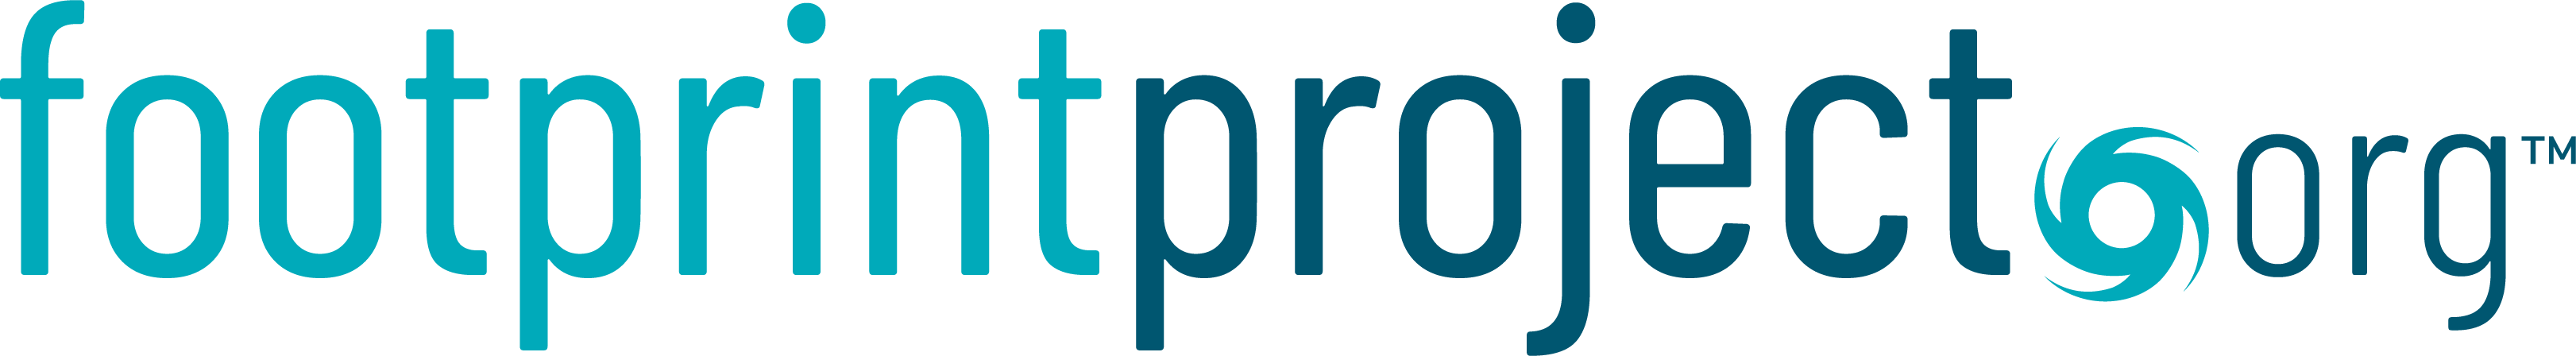 Footprint Project logo